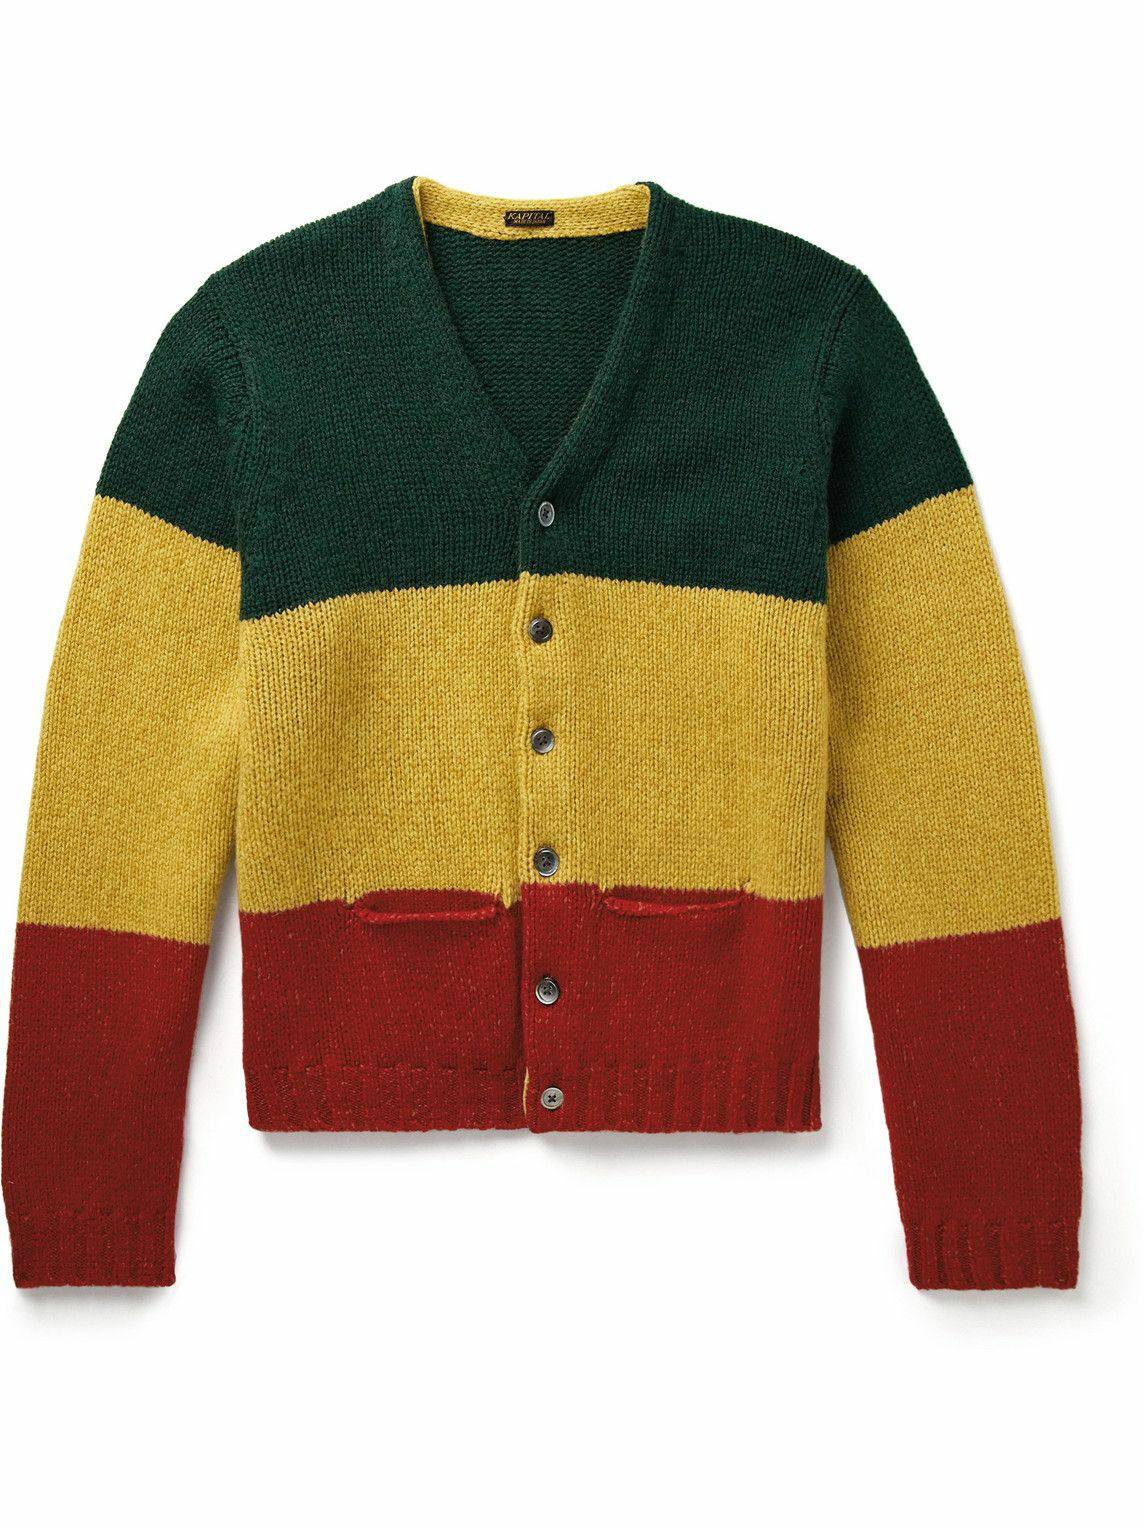 KAPITAL - Striped Wool Cardigan - Yellow KAPITAL